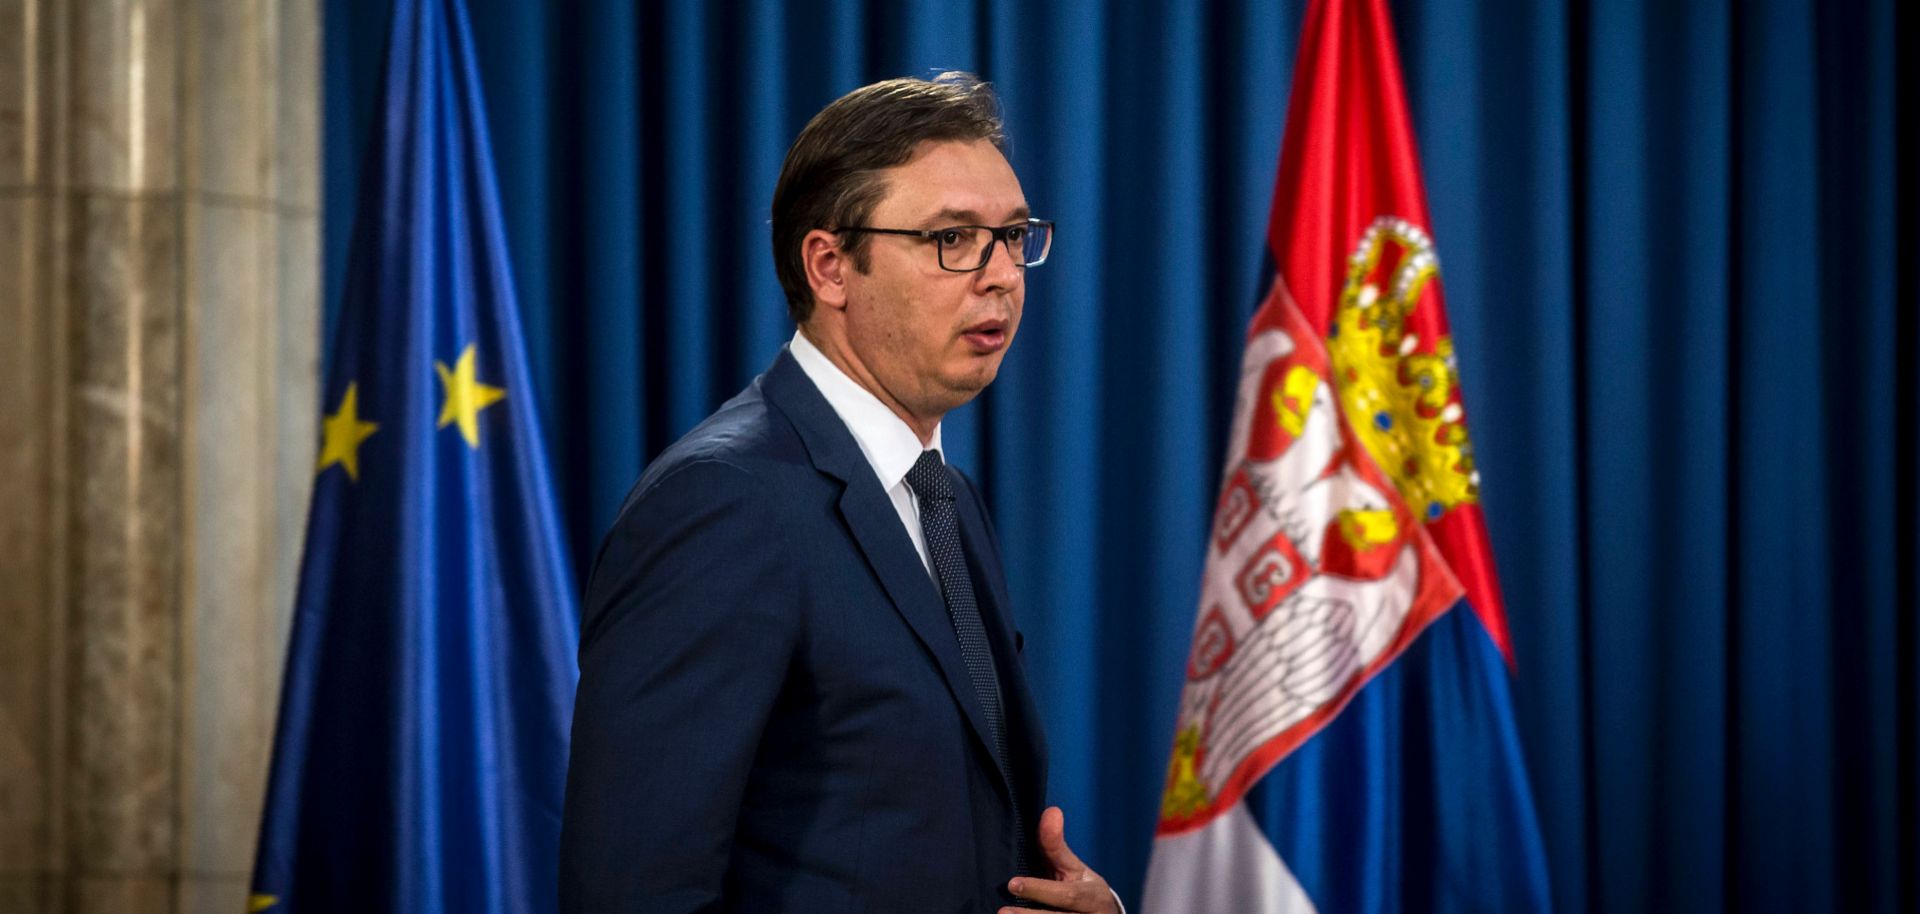 Aleksandar Vucic, Serbia's president, prepares for a press conference June 15, 2017.